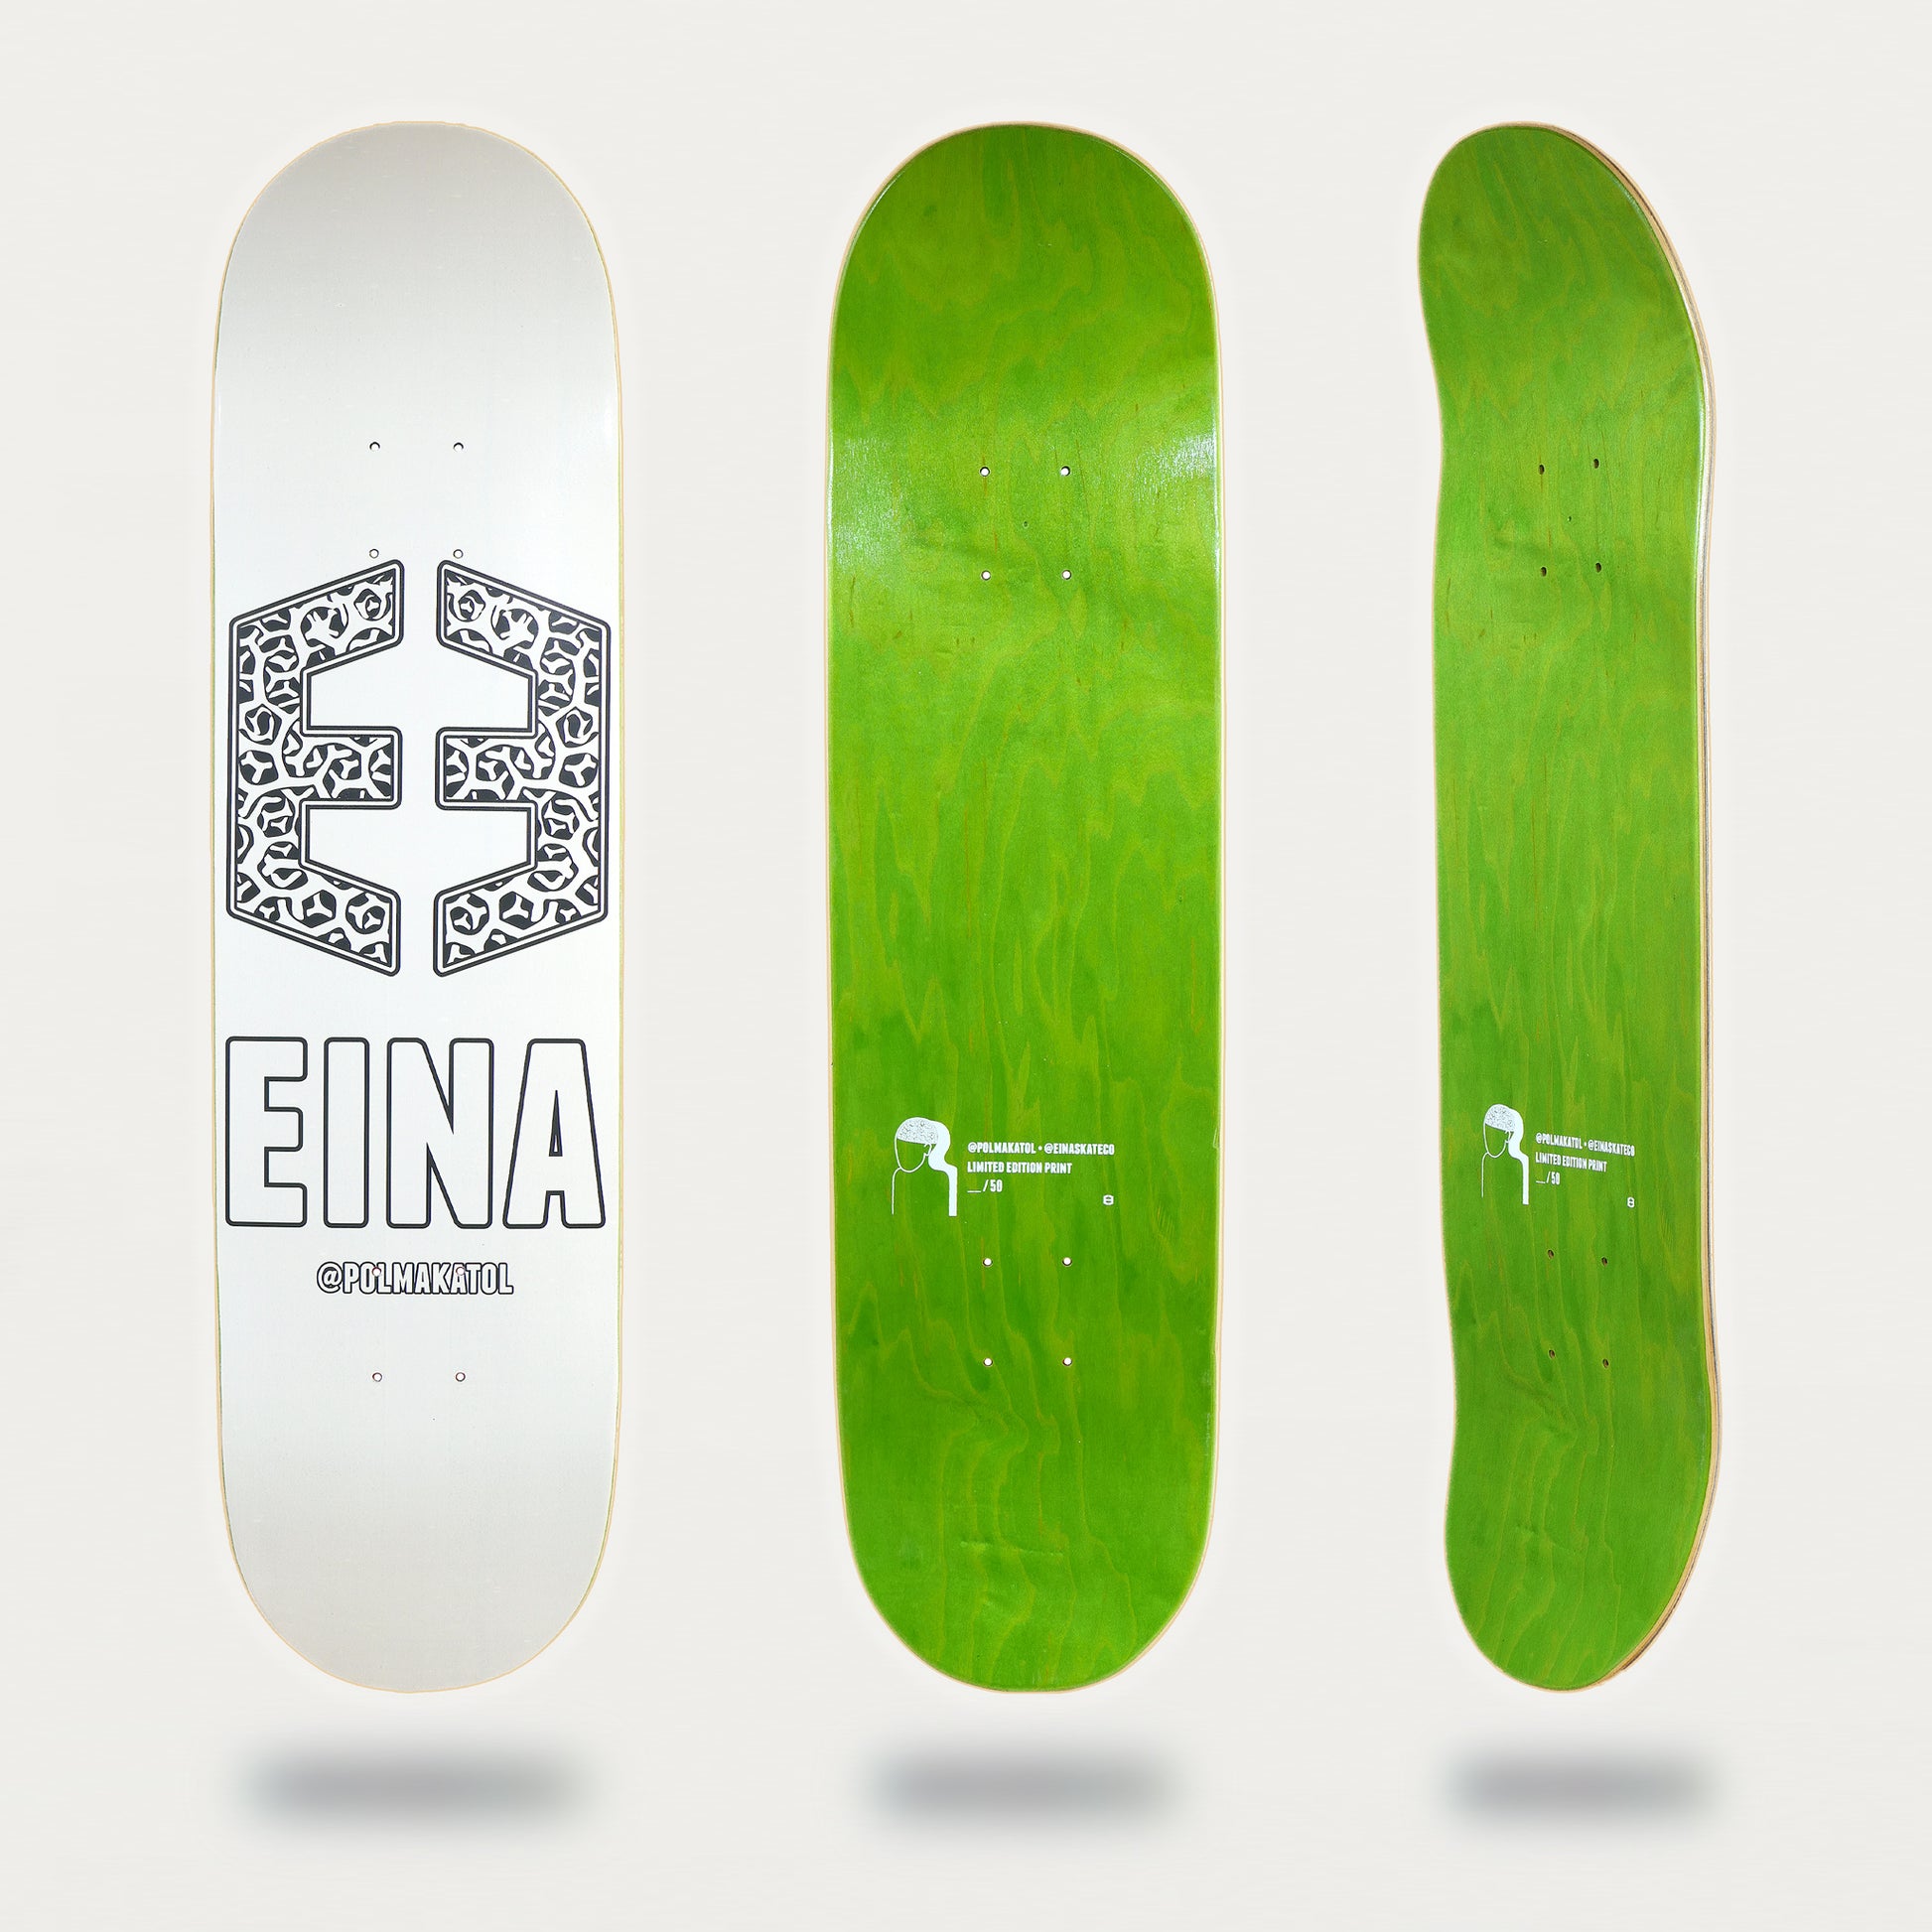 Tabla de Eina skateboard company Pol Amadó "makatol e-logo" 8 pulgadas